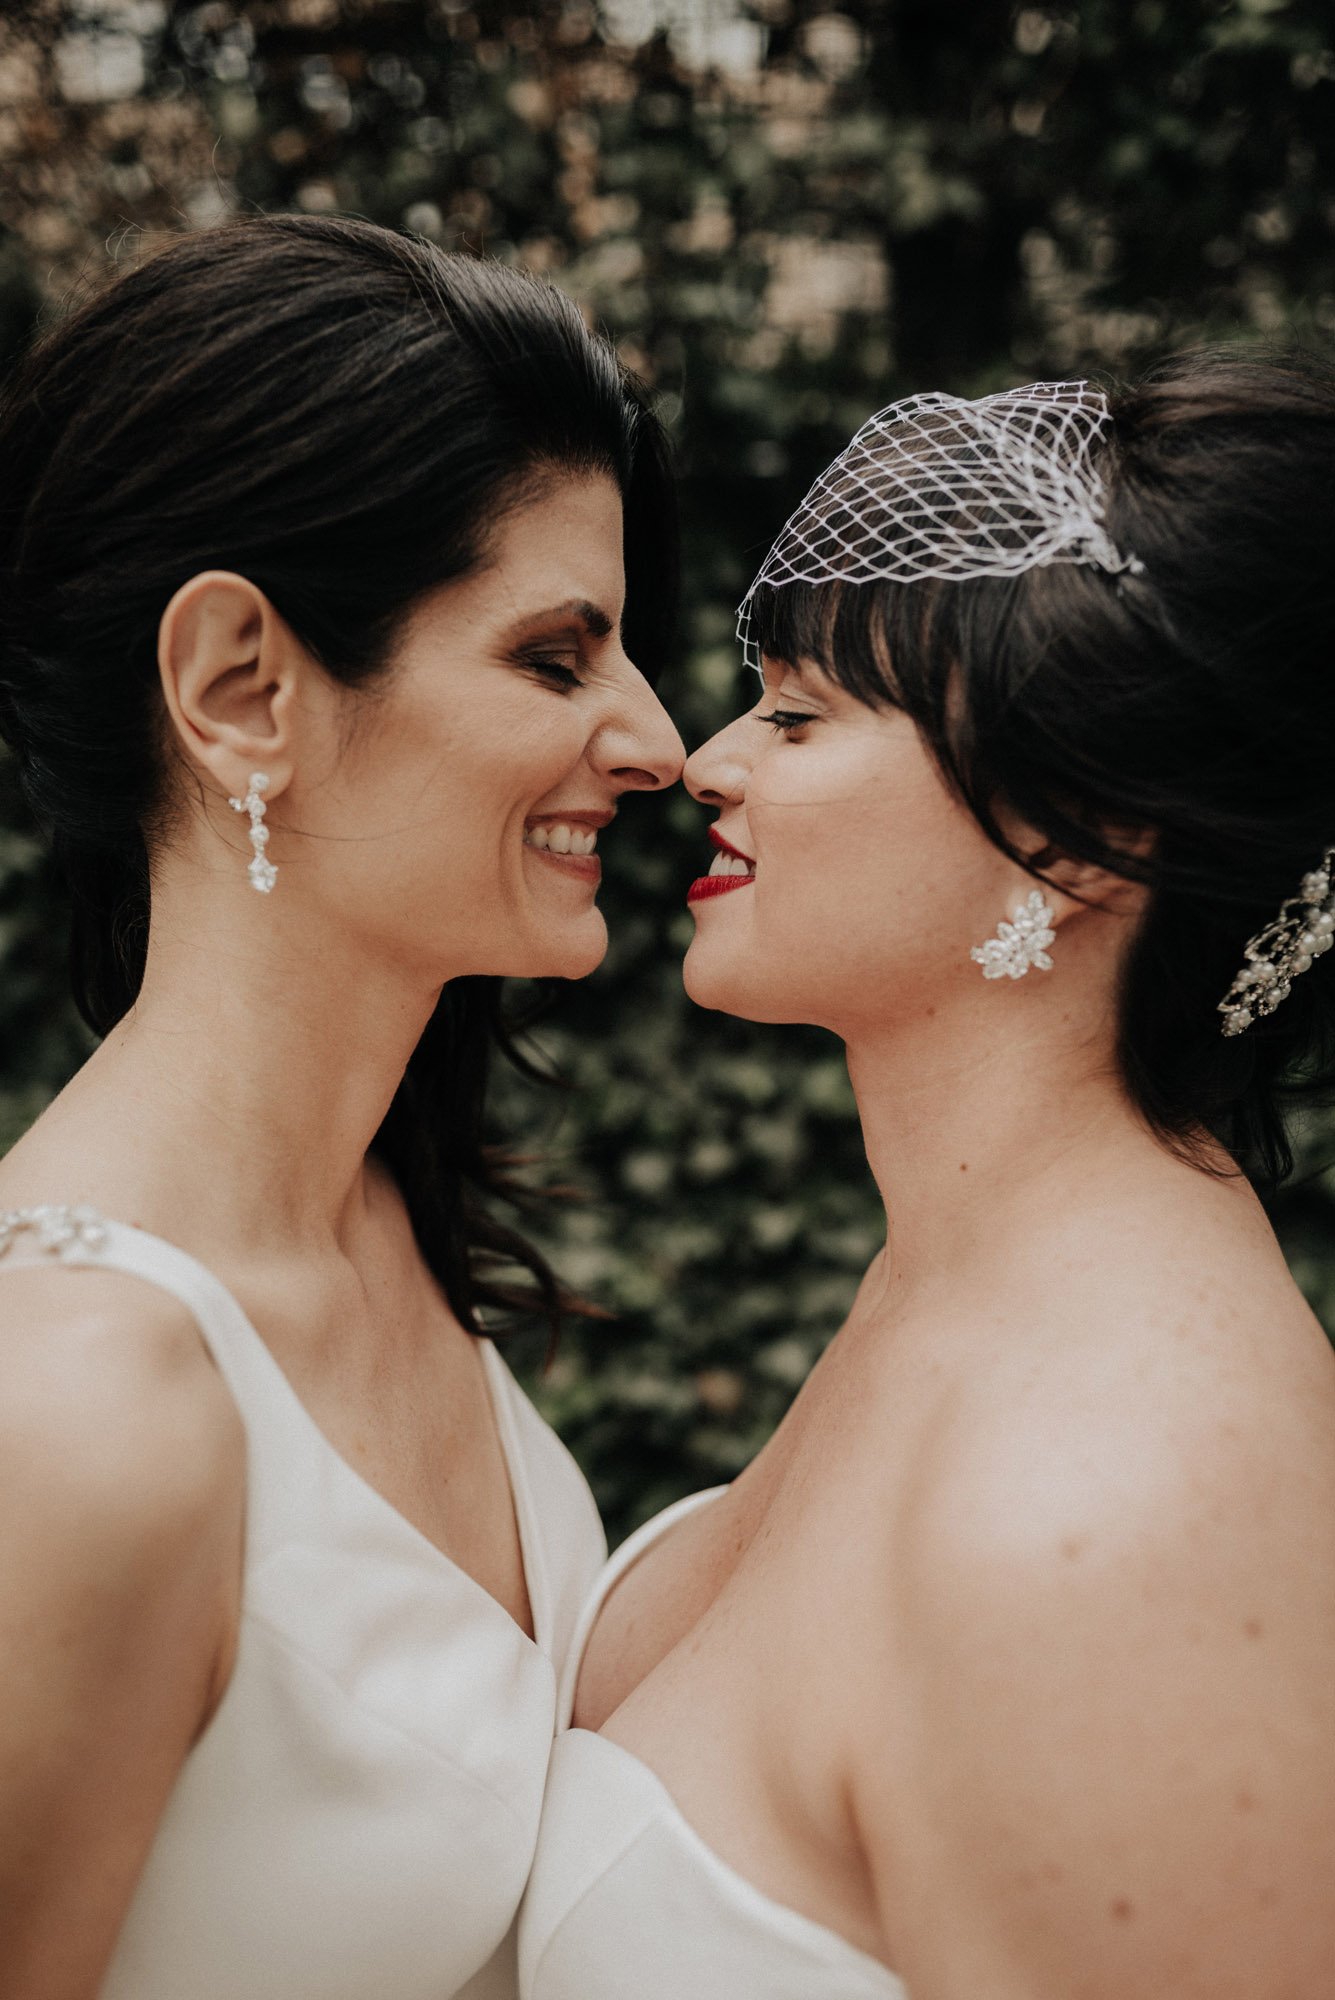 kylewillisphoto-union-trust-philadelphia-lgbt-lgbtq-wedding-gay-same-sex-35mm-pa-nj-ct-nyc-photographer